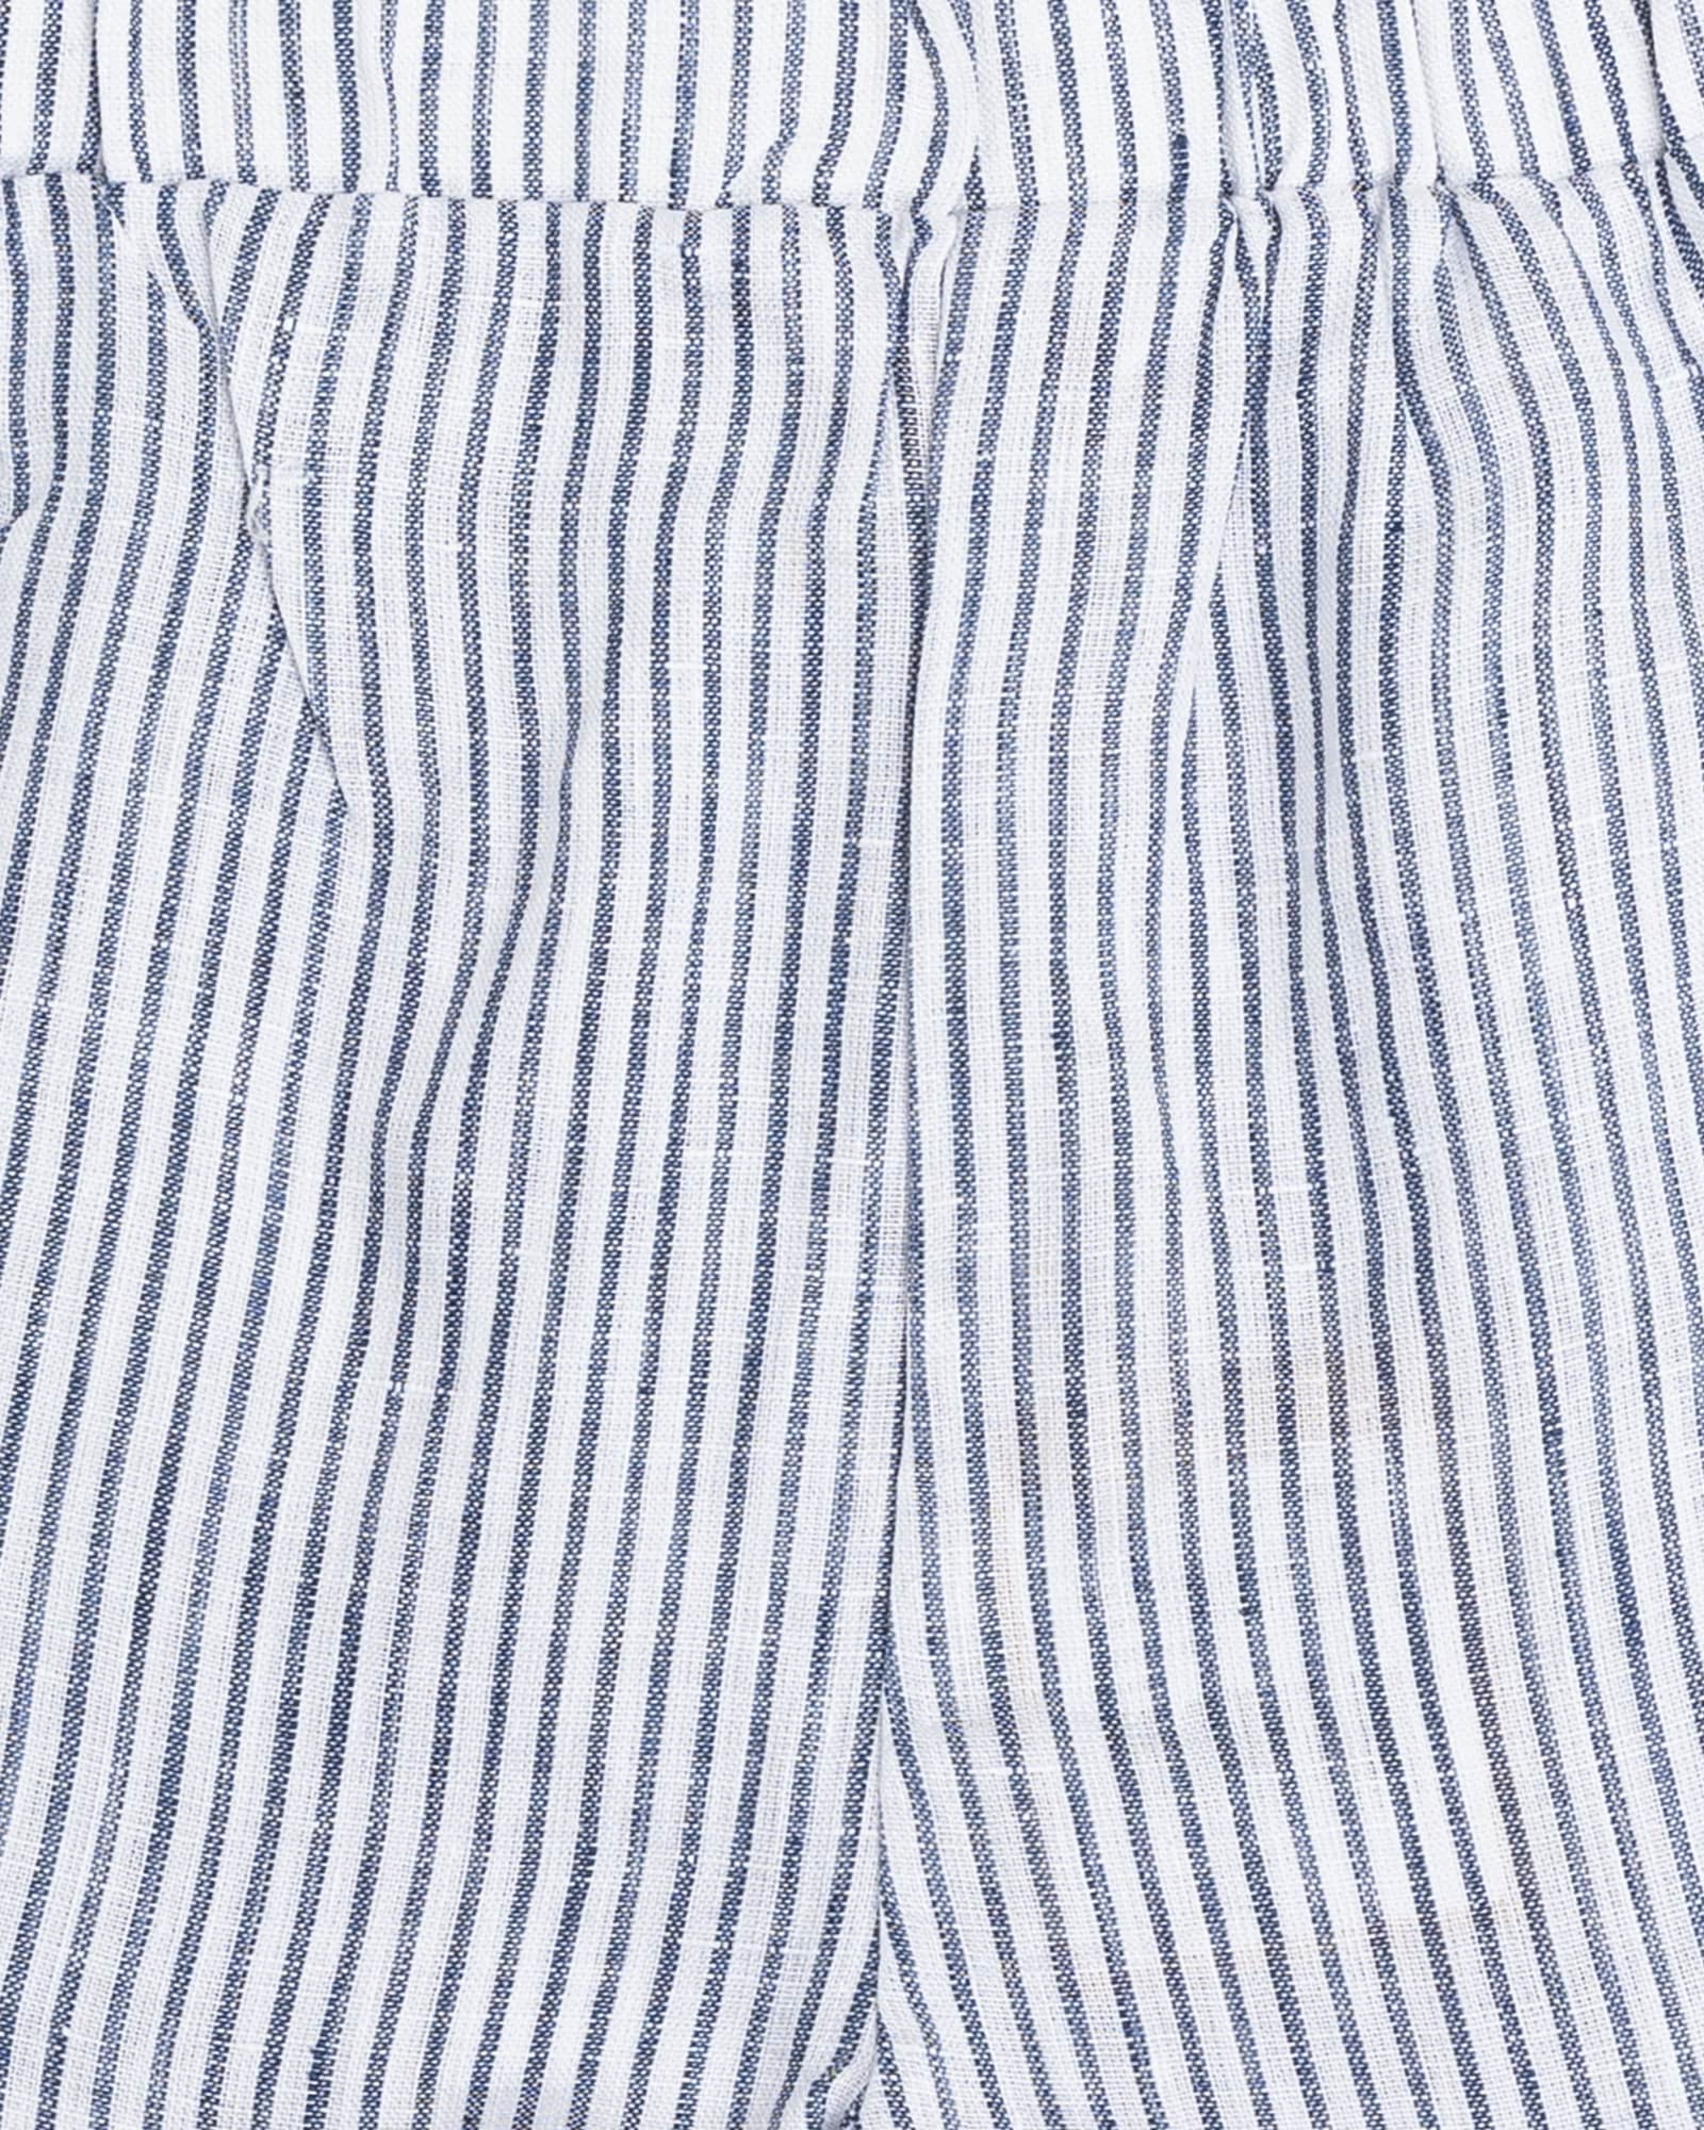 Daisy Stripe Frill Short in NAVY/WHITE